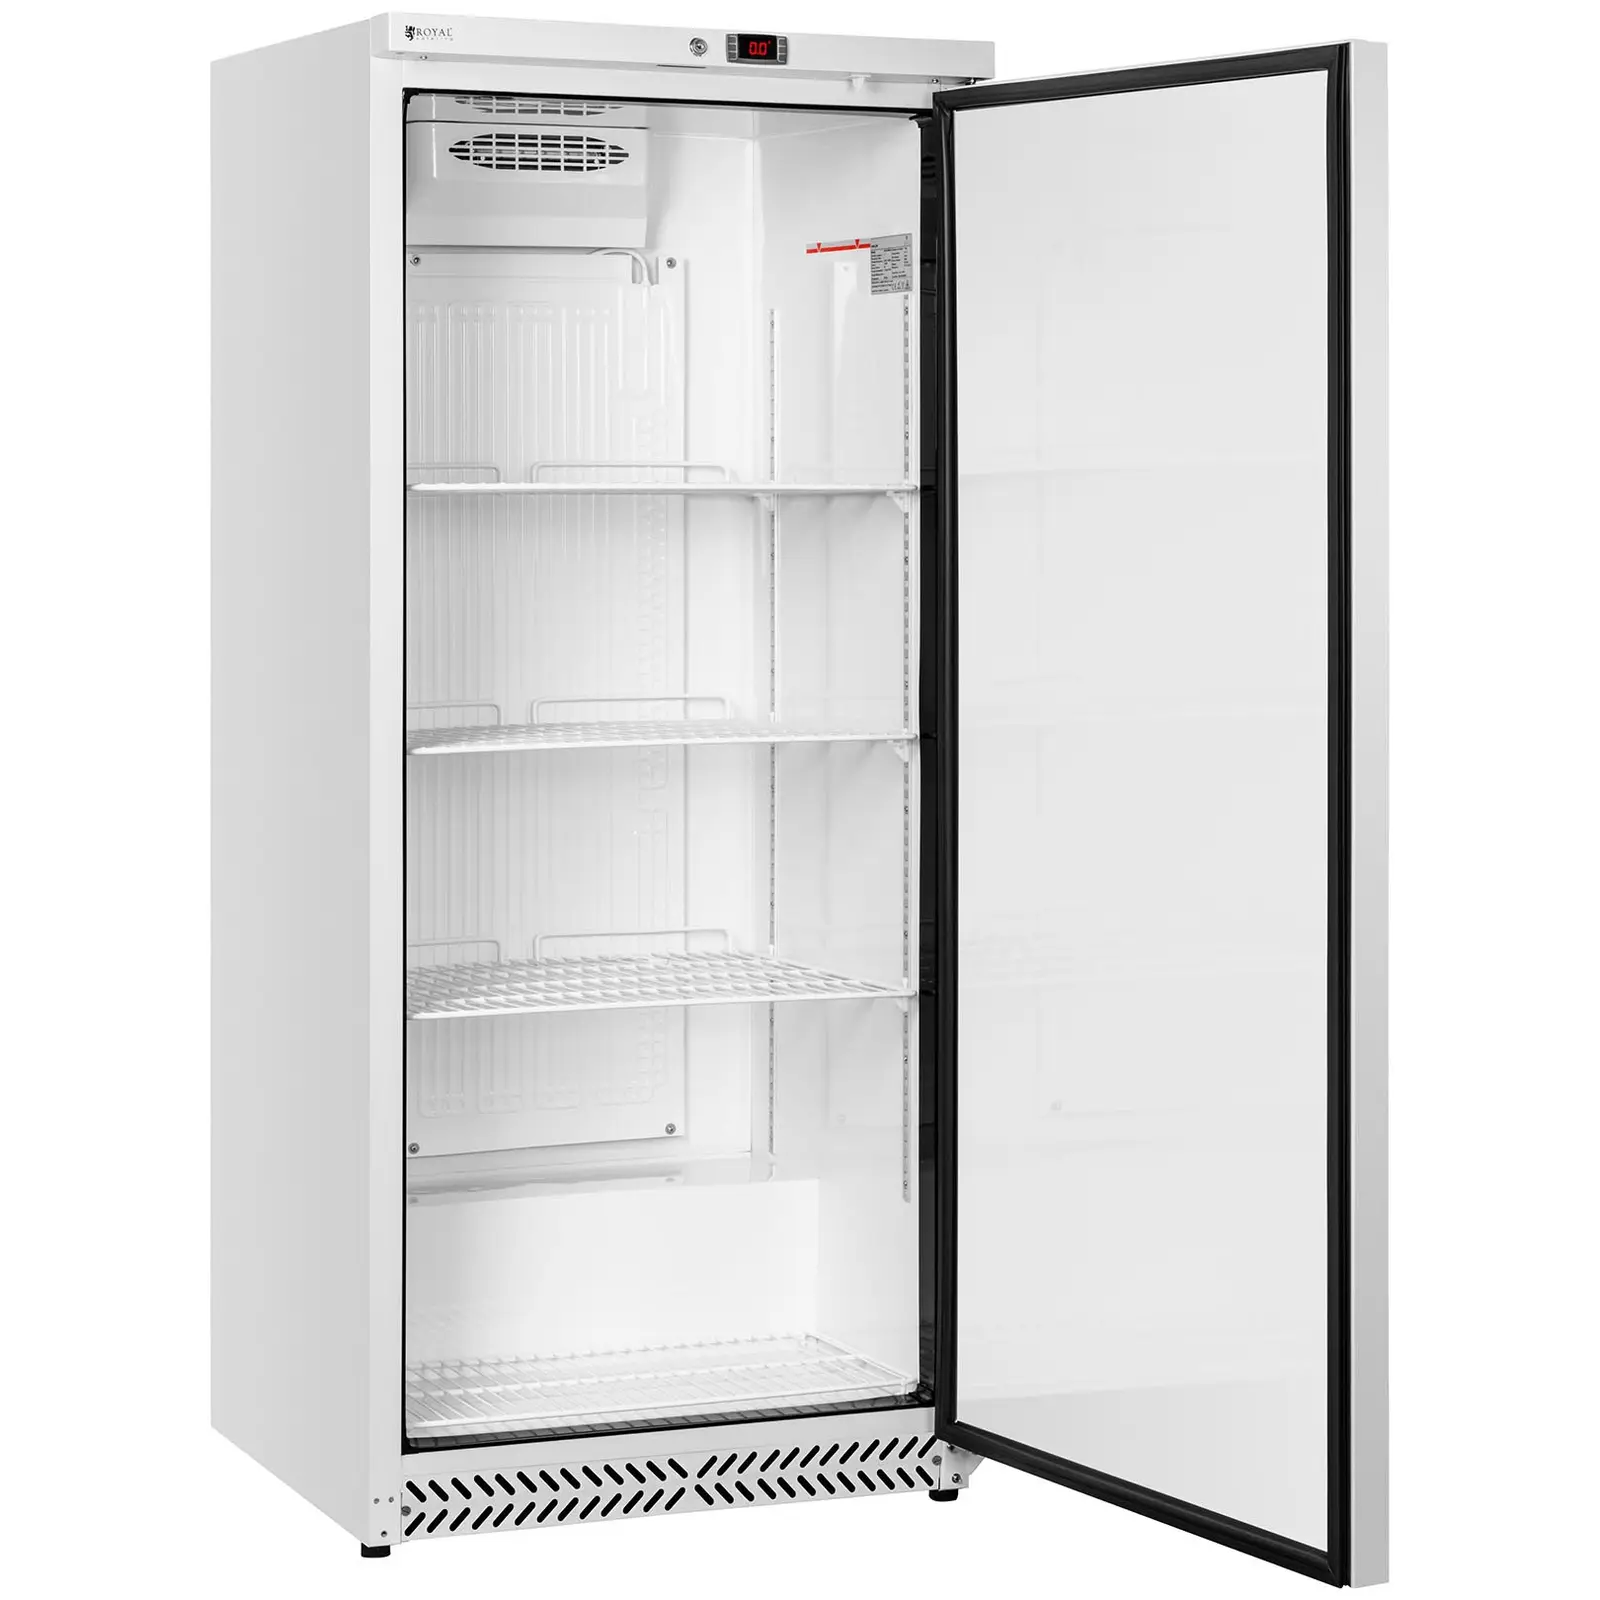 Gastro chladnička - 590 l